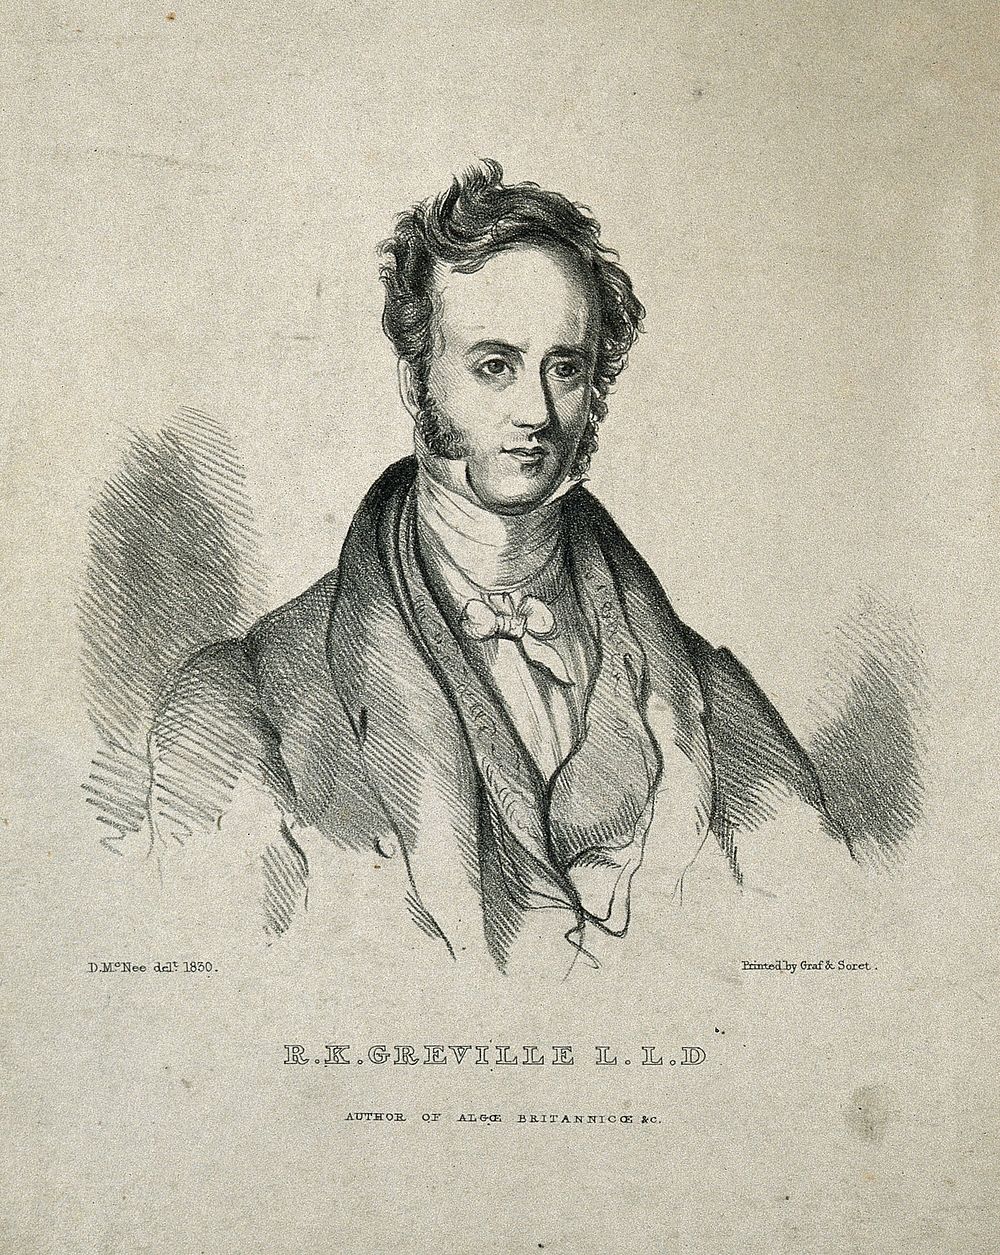 Robert Kaye Greville. Lithograph by Sophia Alexander Turner after D. McNee, 1830.